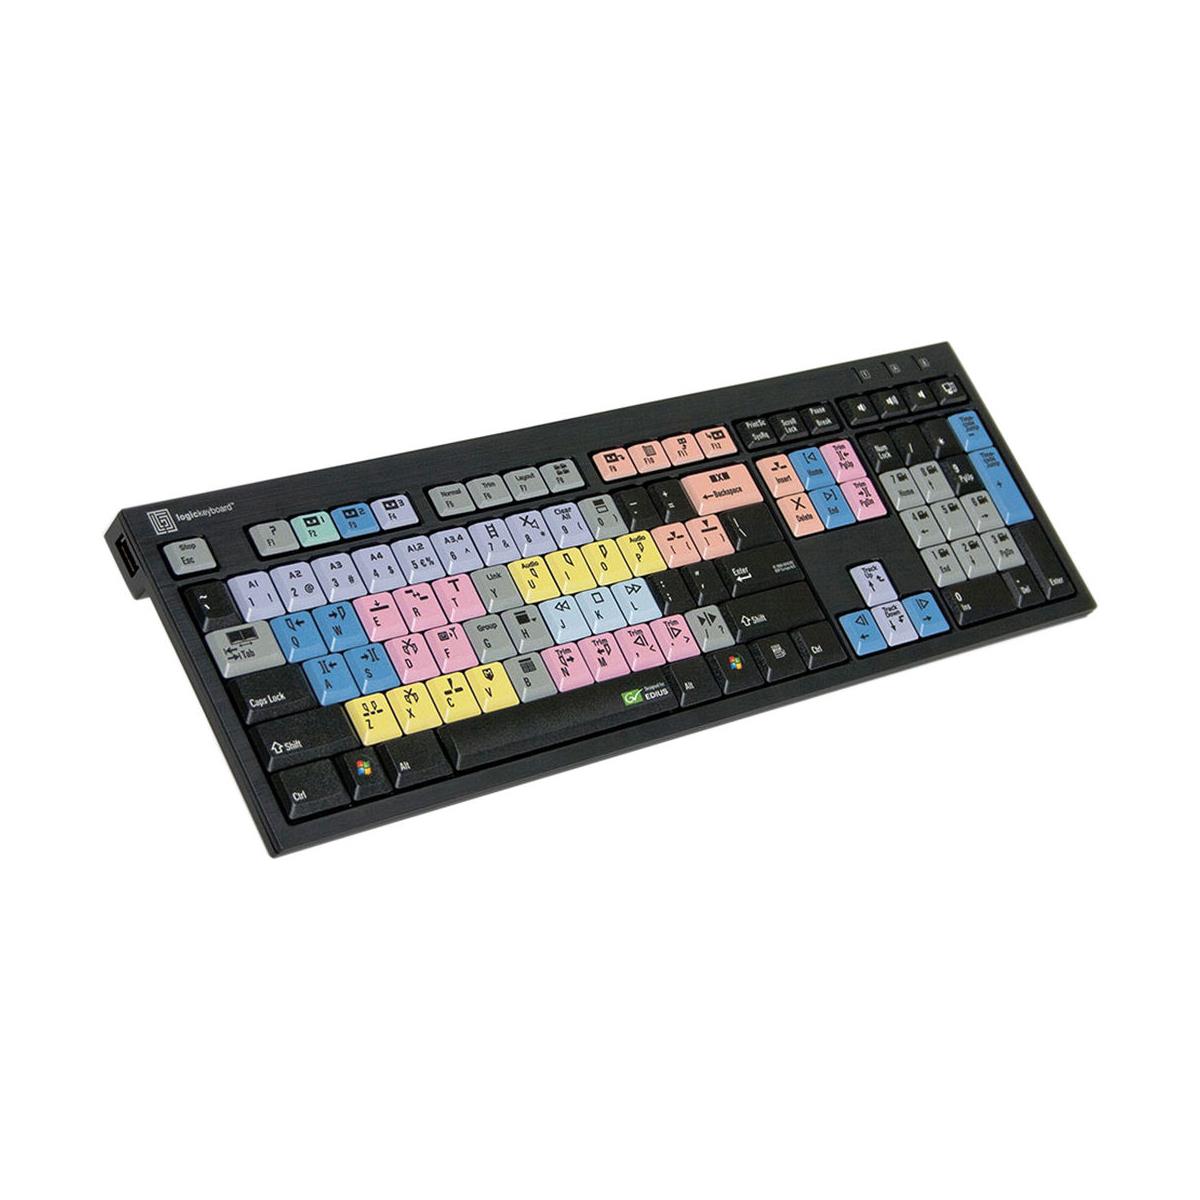 

LogicKeyboard Grass Valley EDIUS American English Nero PC Slim Line Keyboard